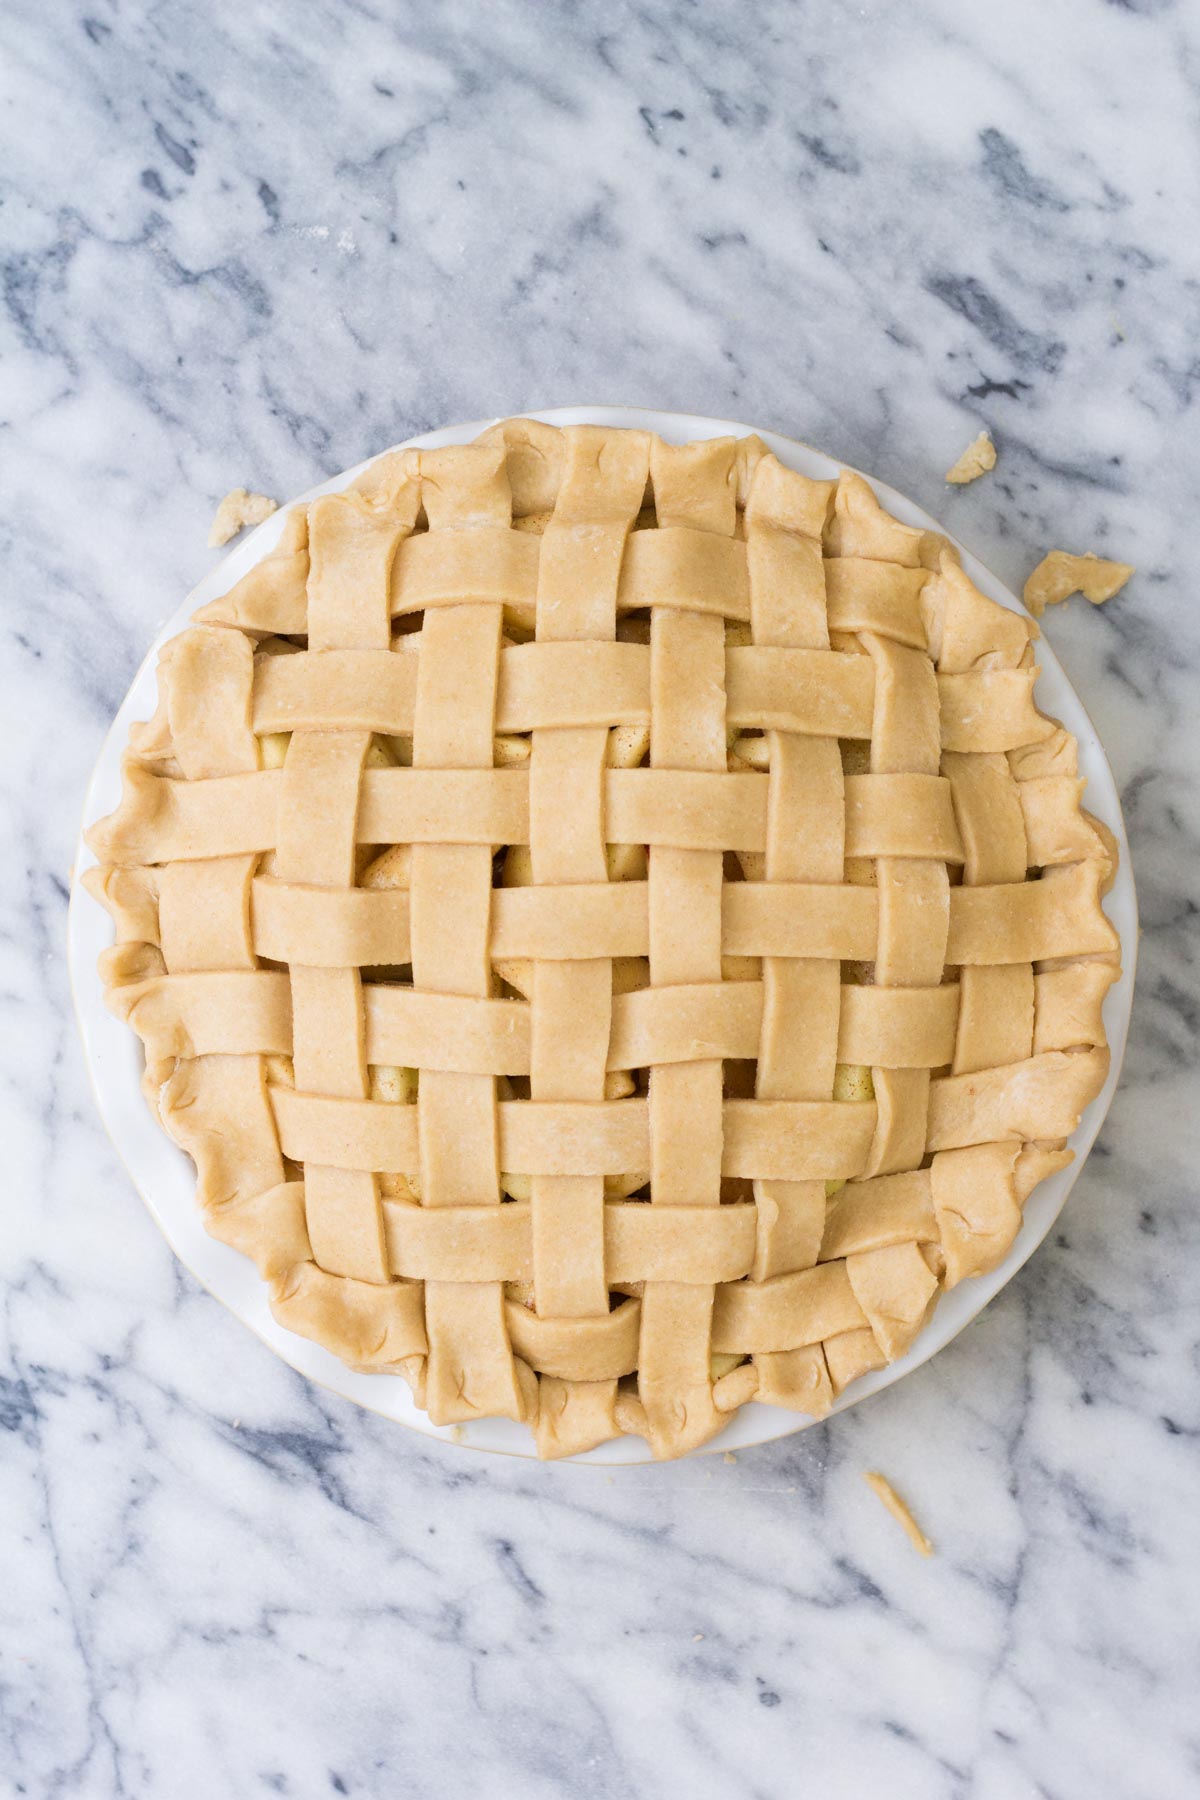 Unbaked apple pie with lattice crust.